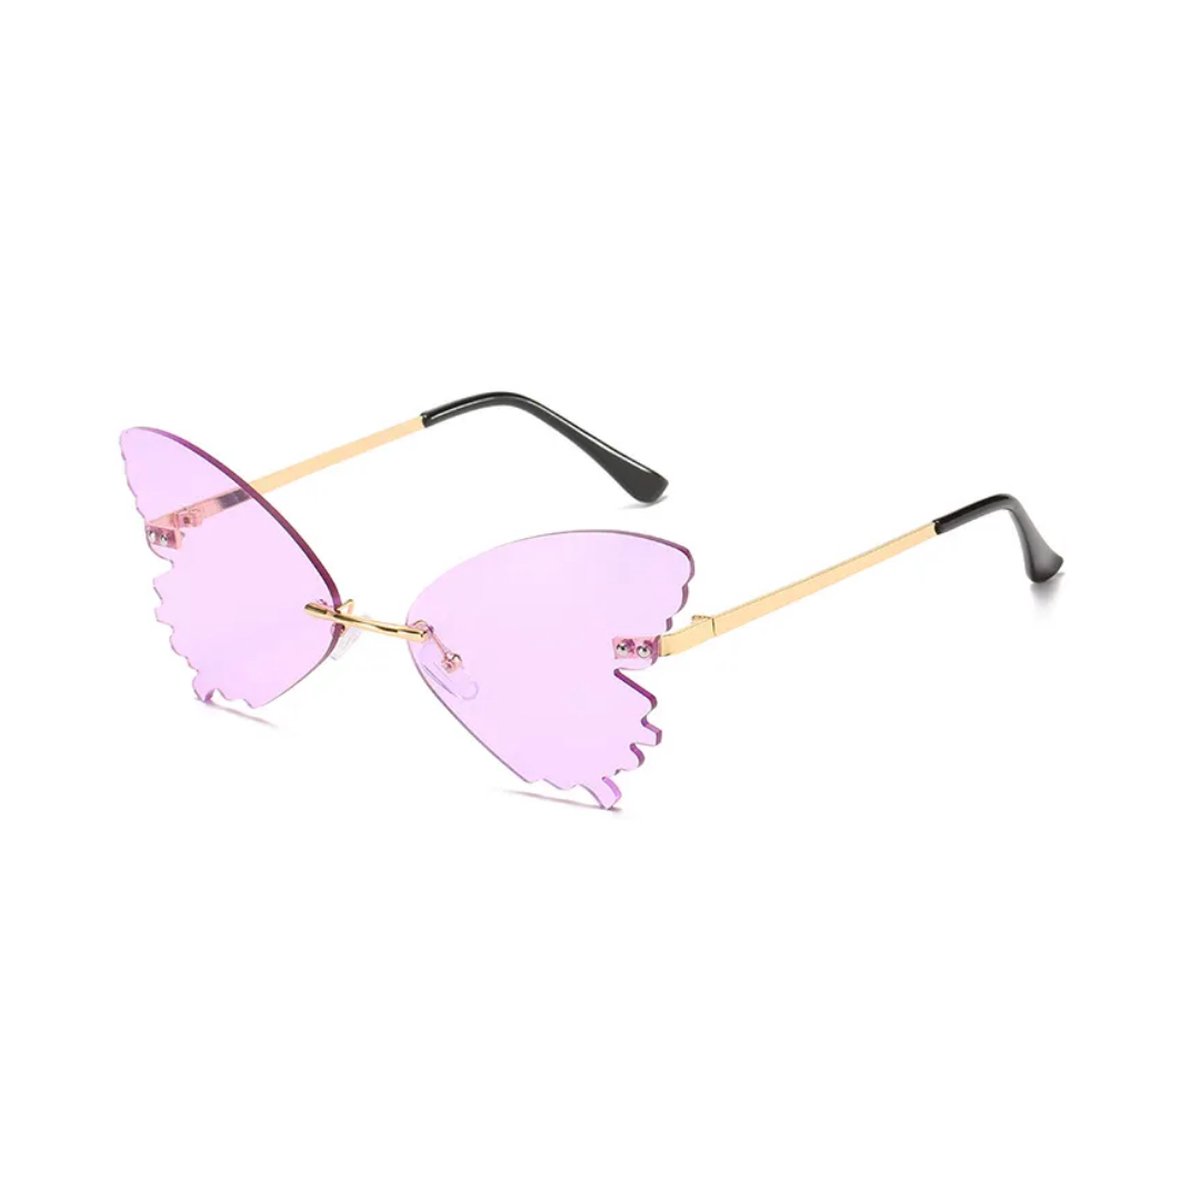 Vlinder zonnebril - Paars - festivalbril / hippie bril / technobril / rave bril / butterfly glasses / retro zonnebril